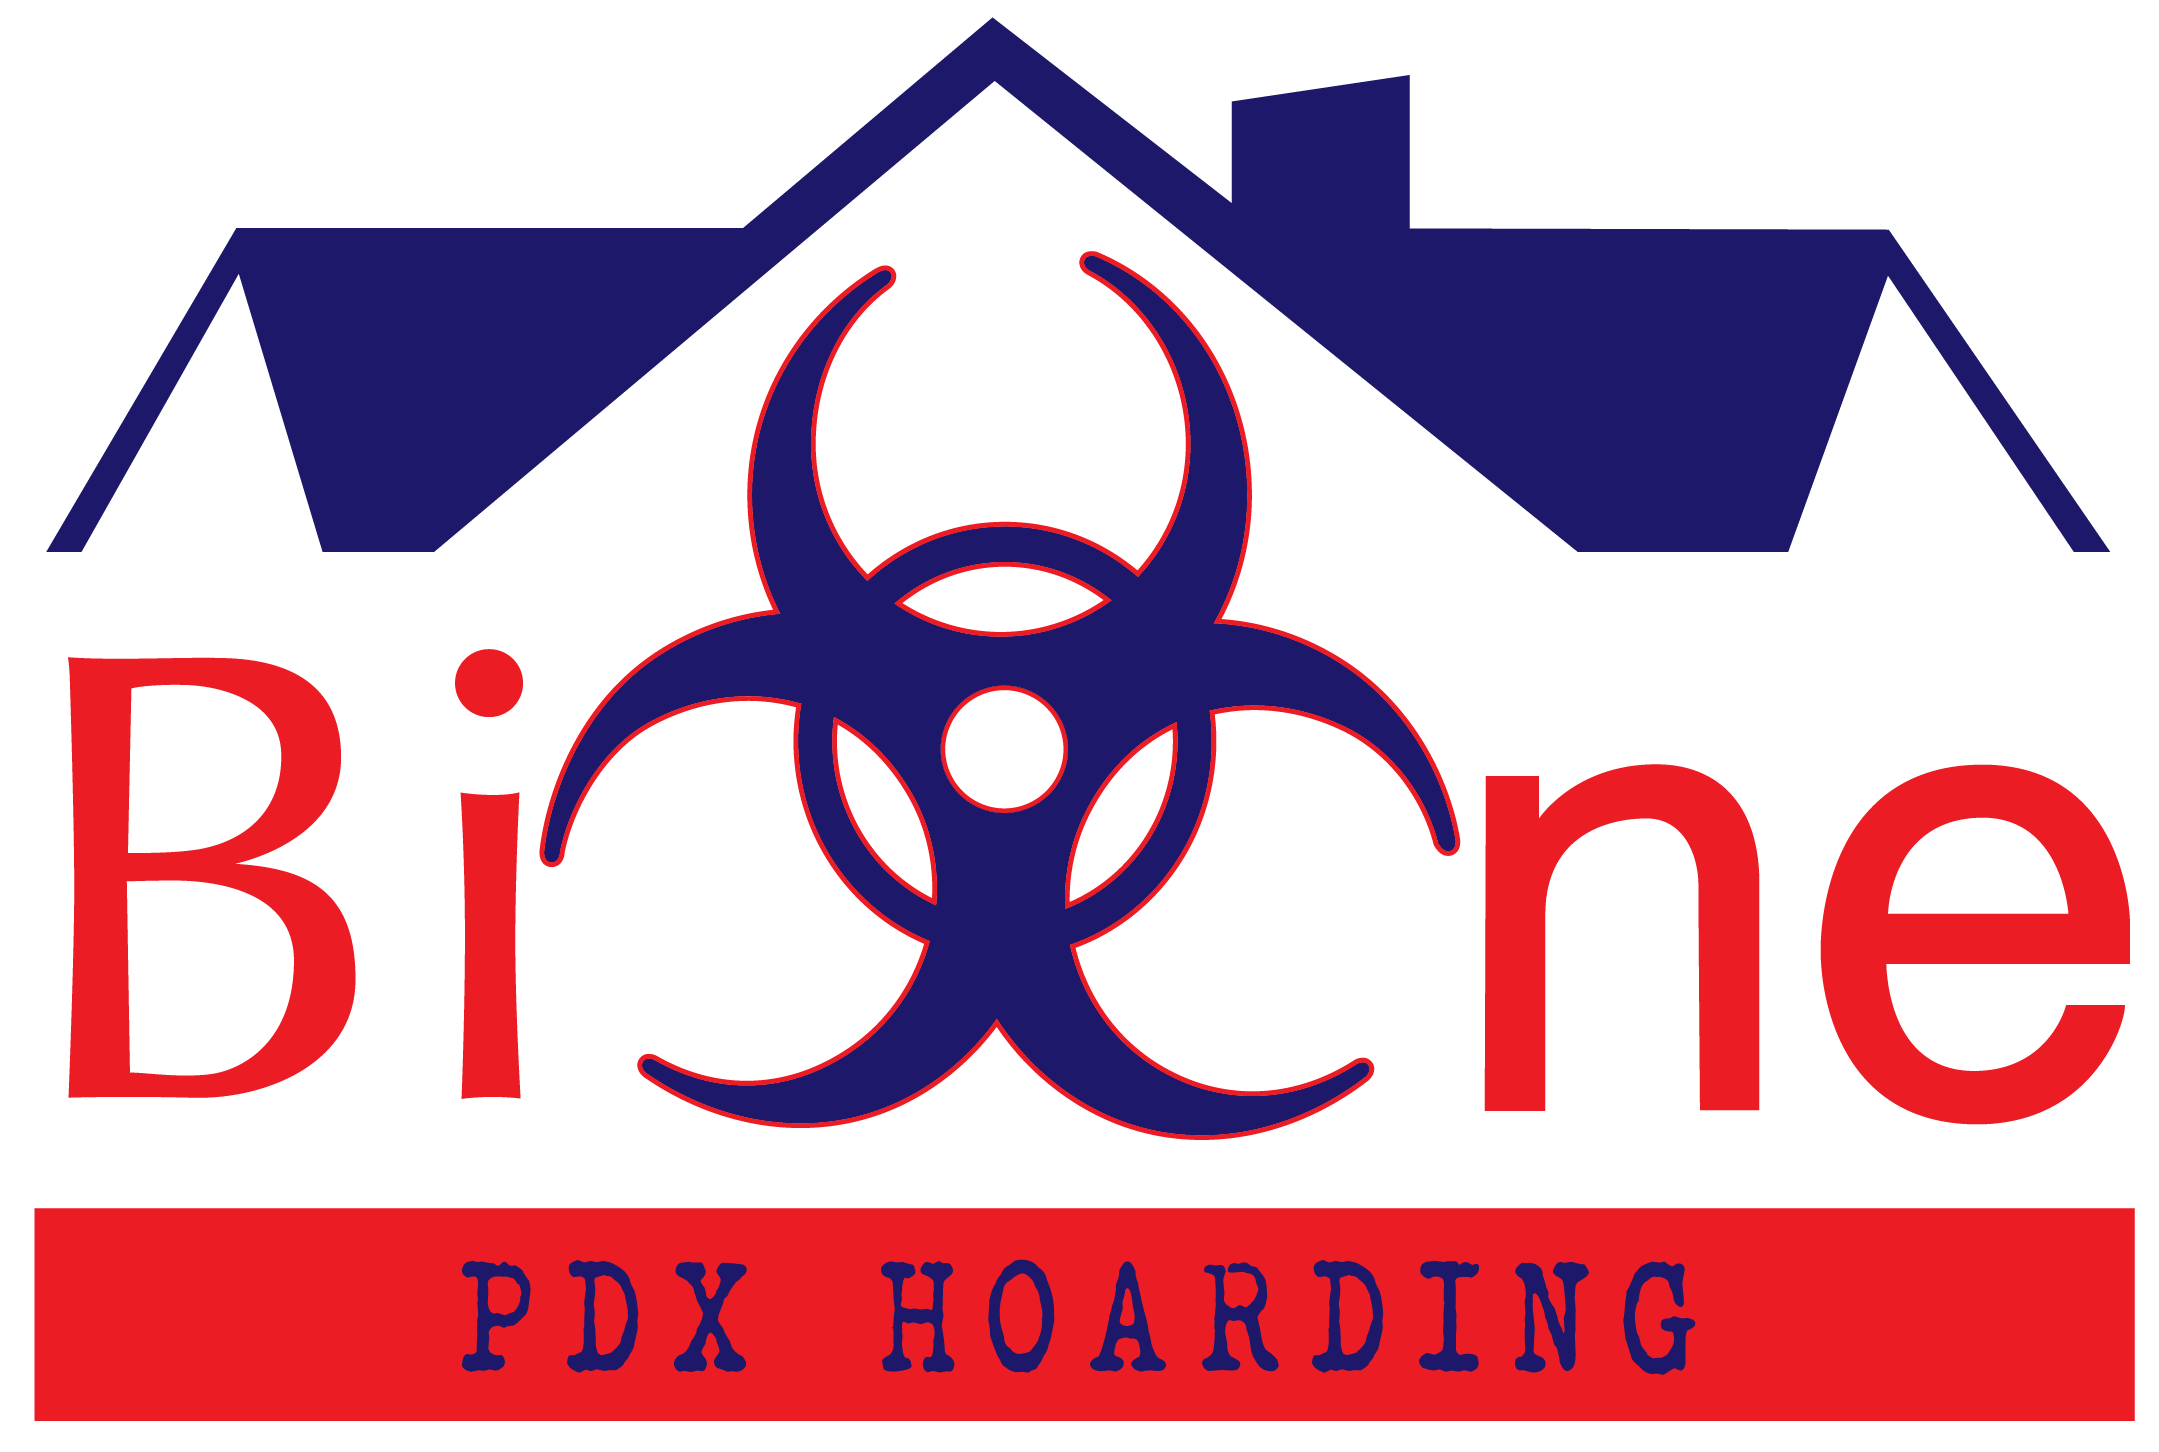 PDX Hoarding